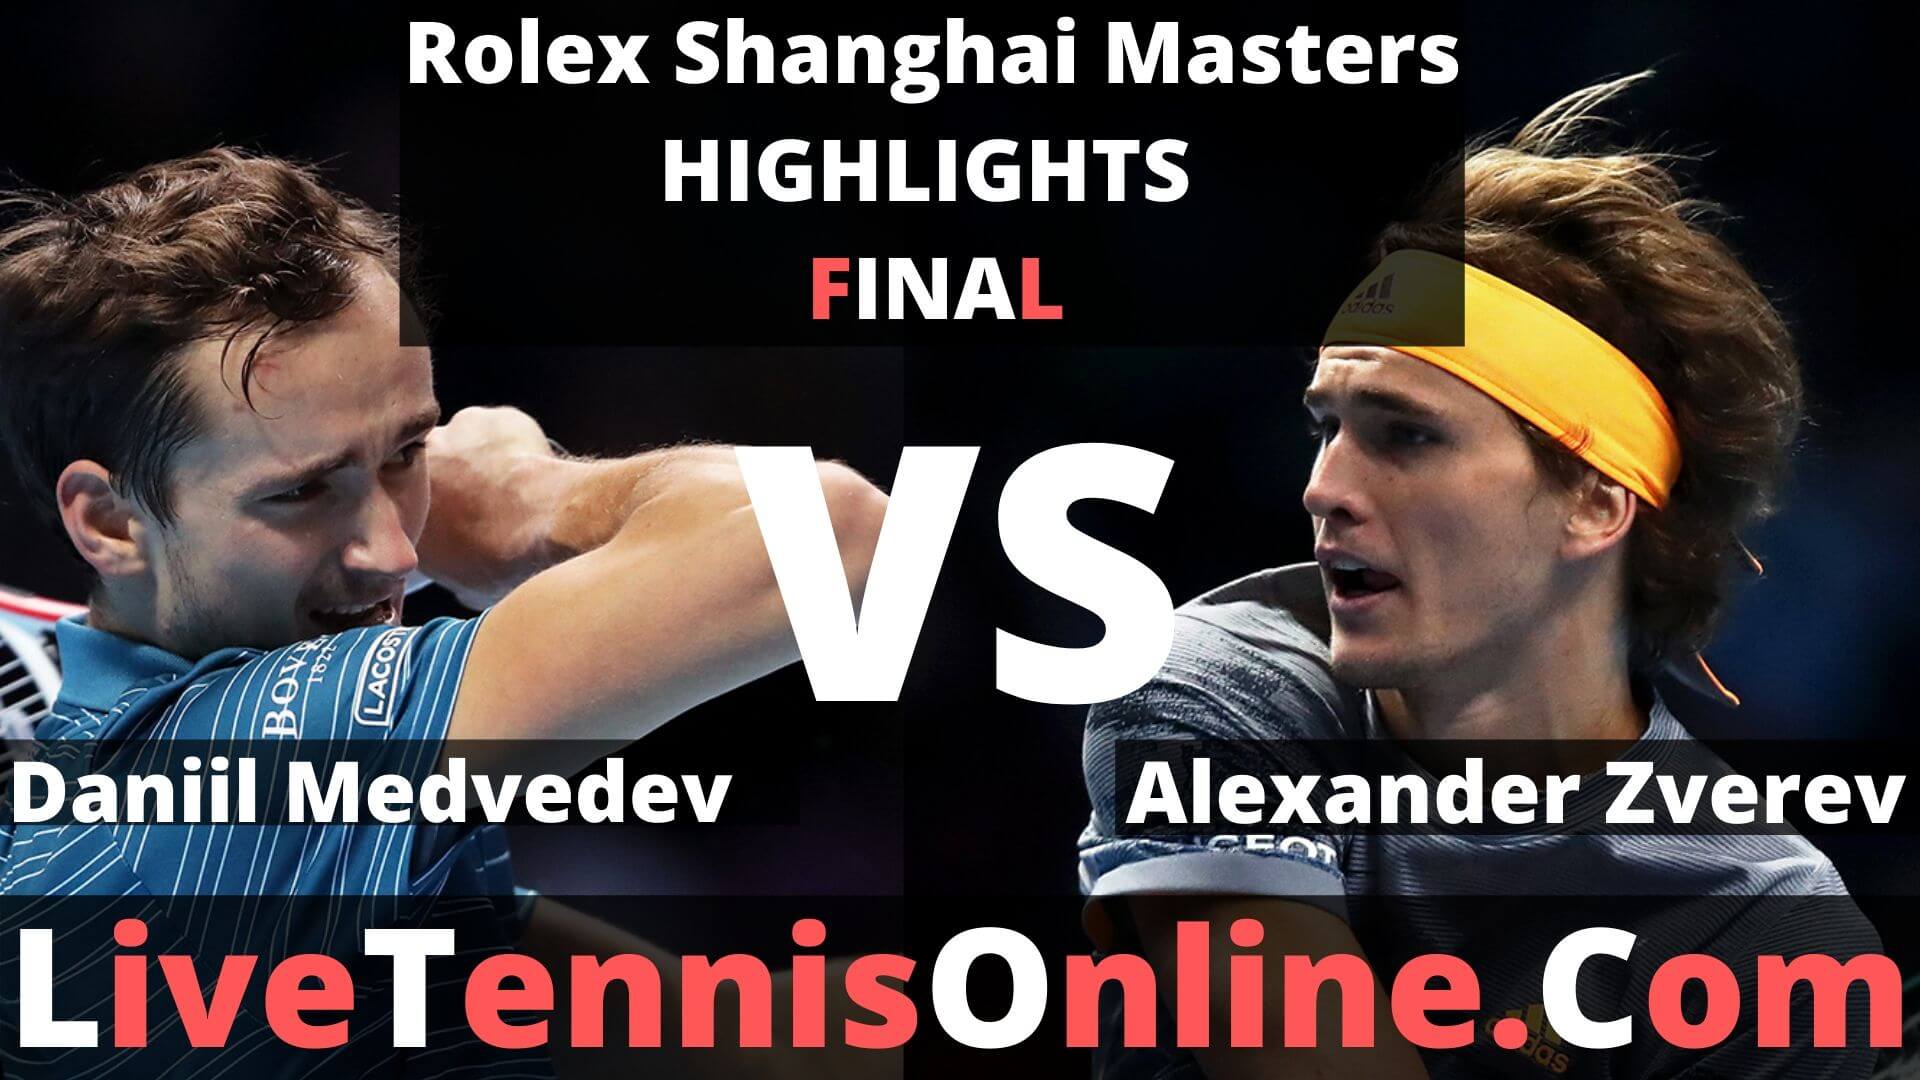 Daniil Medvedev Vs Alexander Zverev Highlights 2019 Rolex Shanghai Masters Final